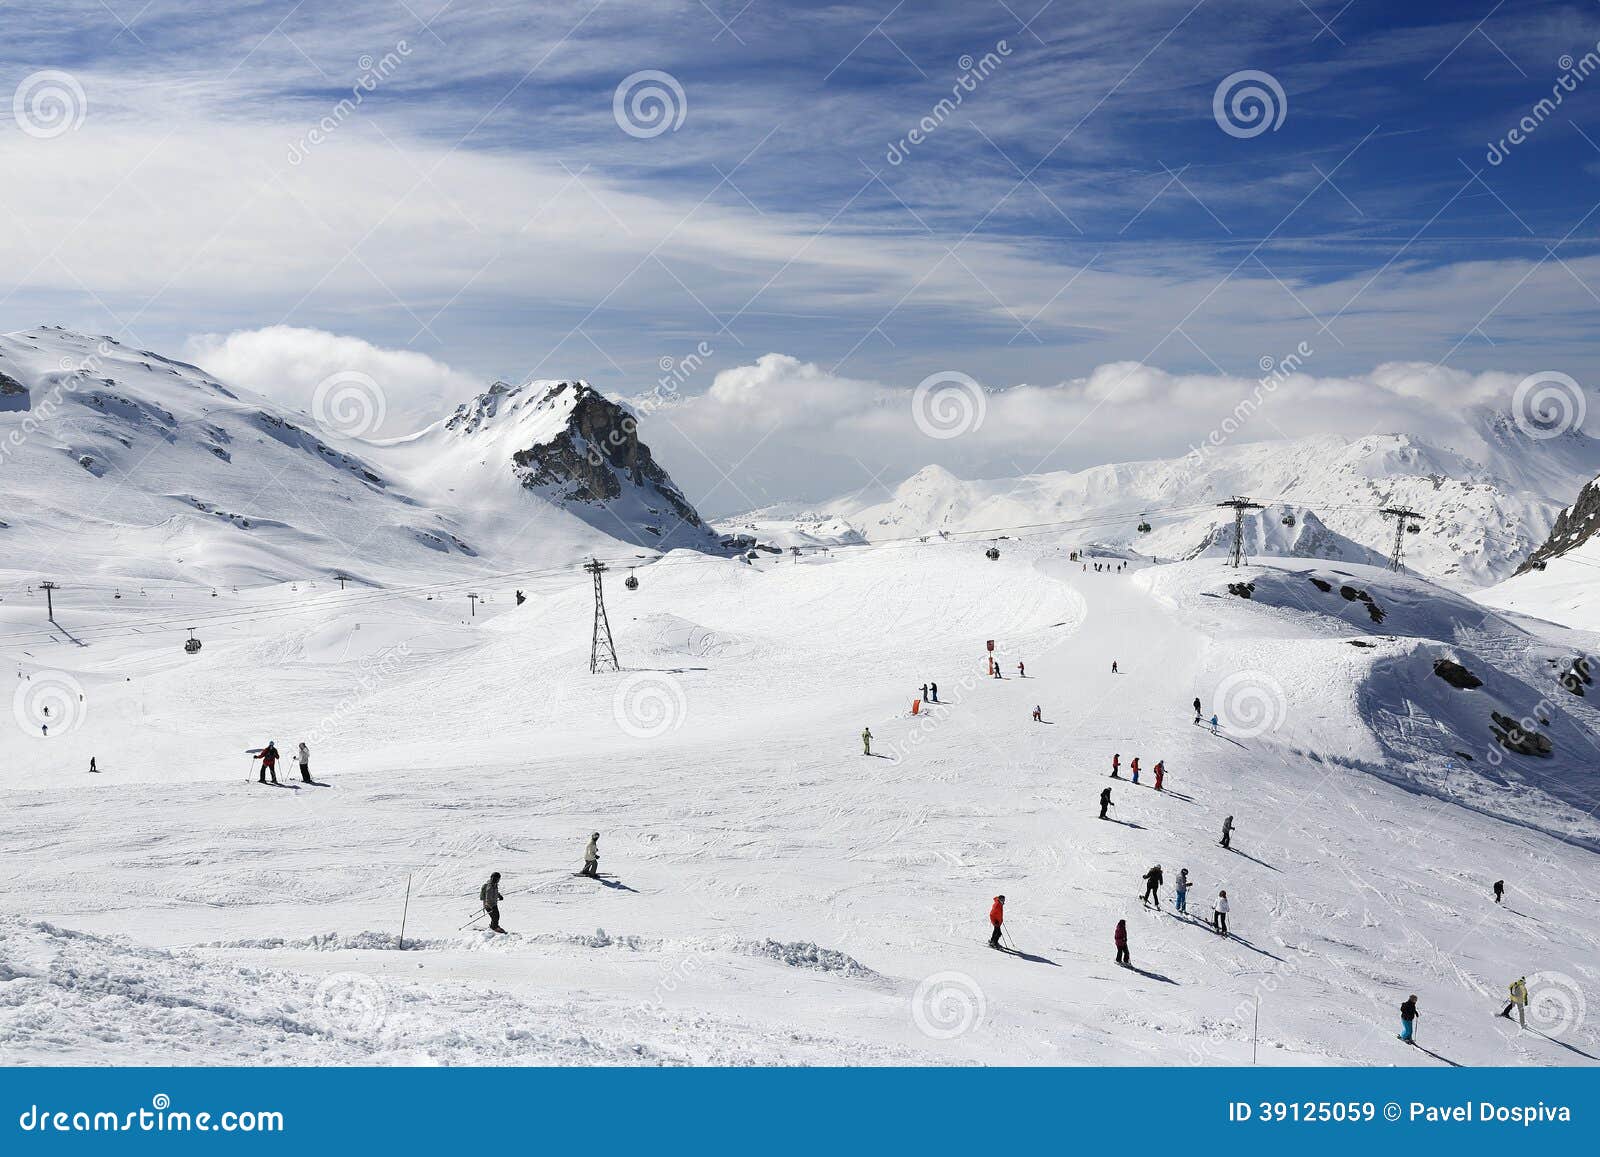 winter landscape in the ski resort of la plagne, france